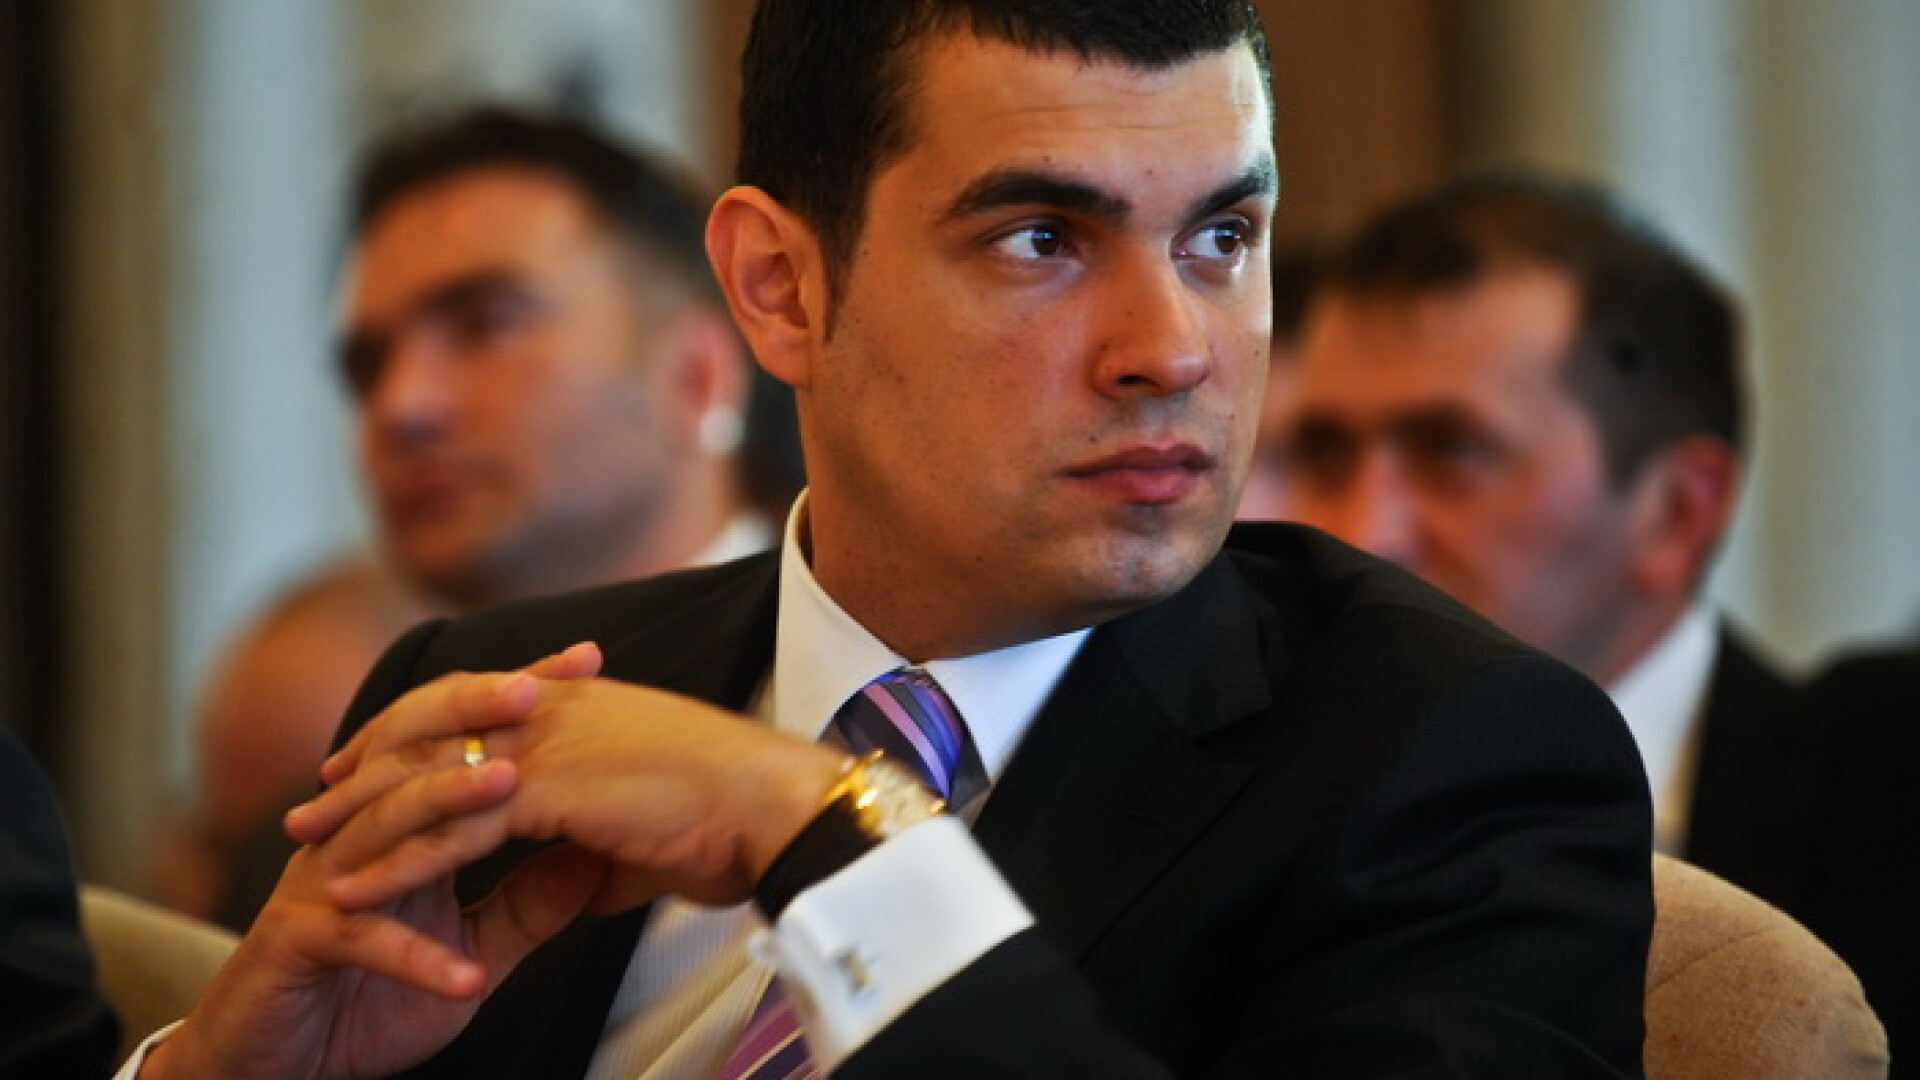 Razvan Mustea-Serban